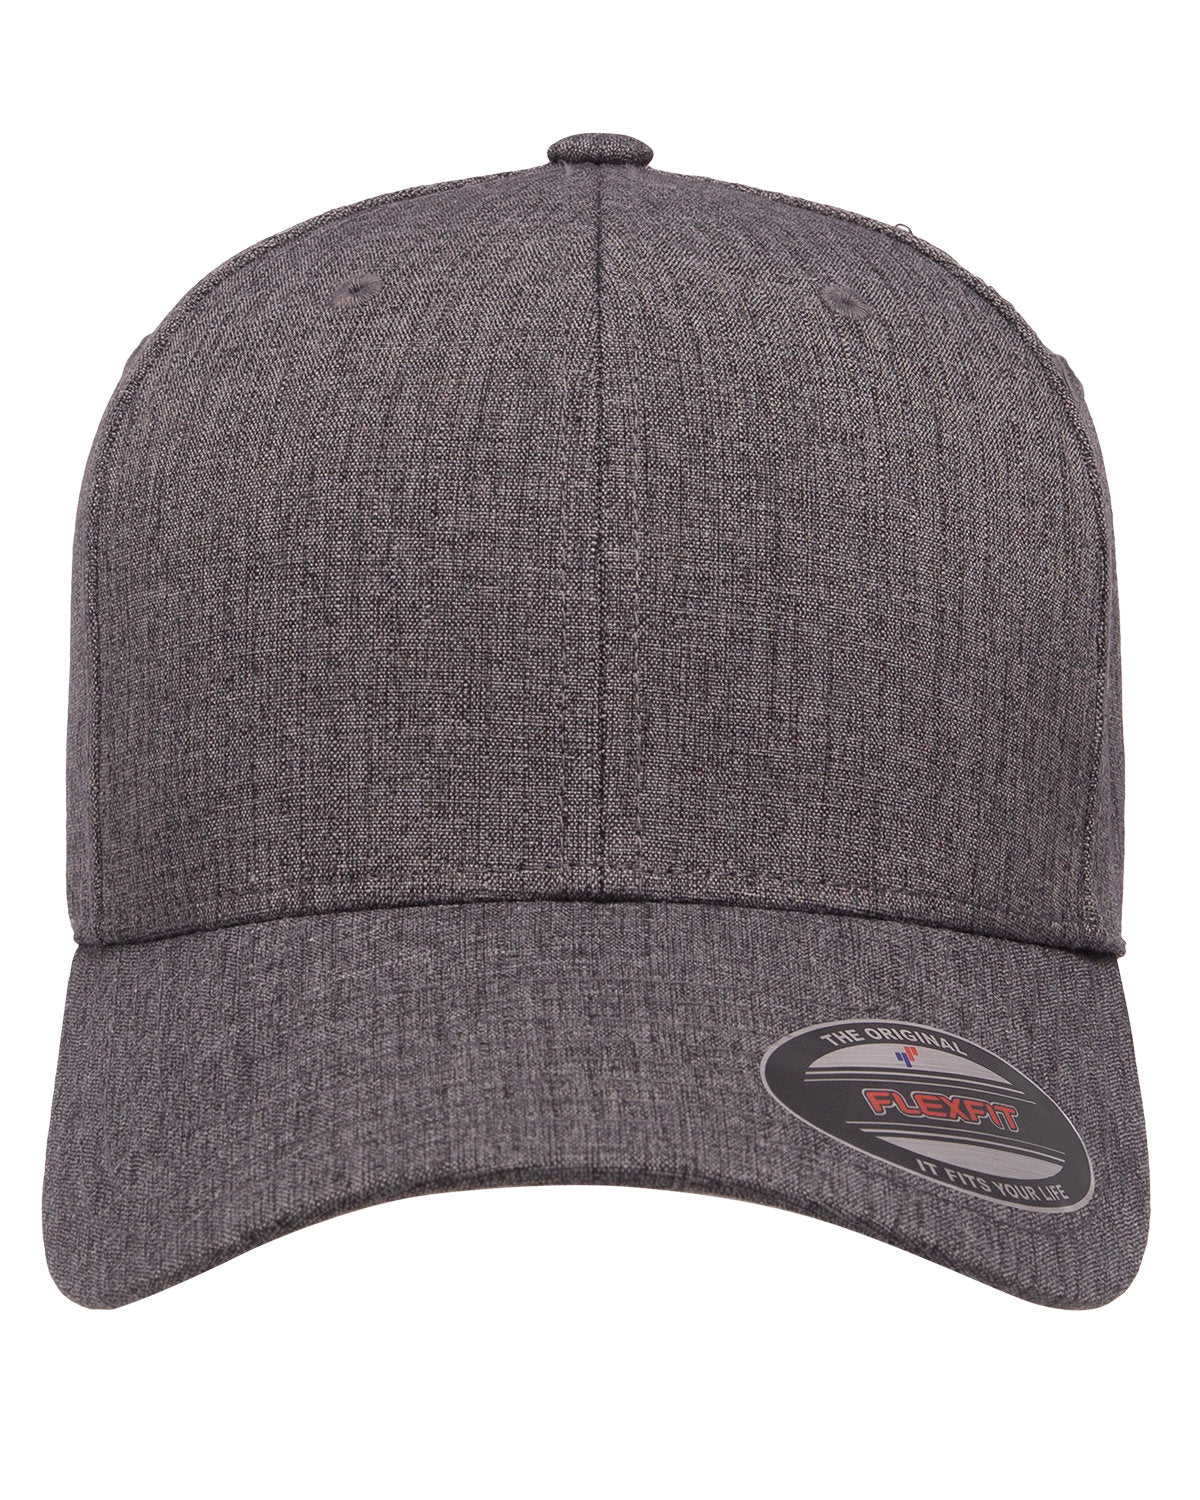 Grey featherlight cap